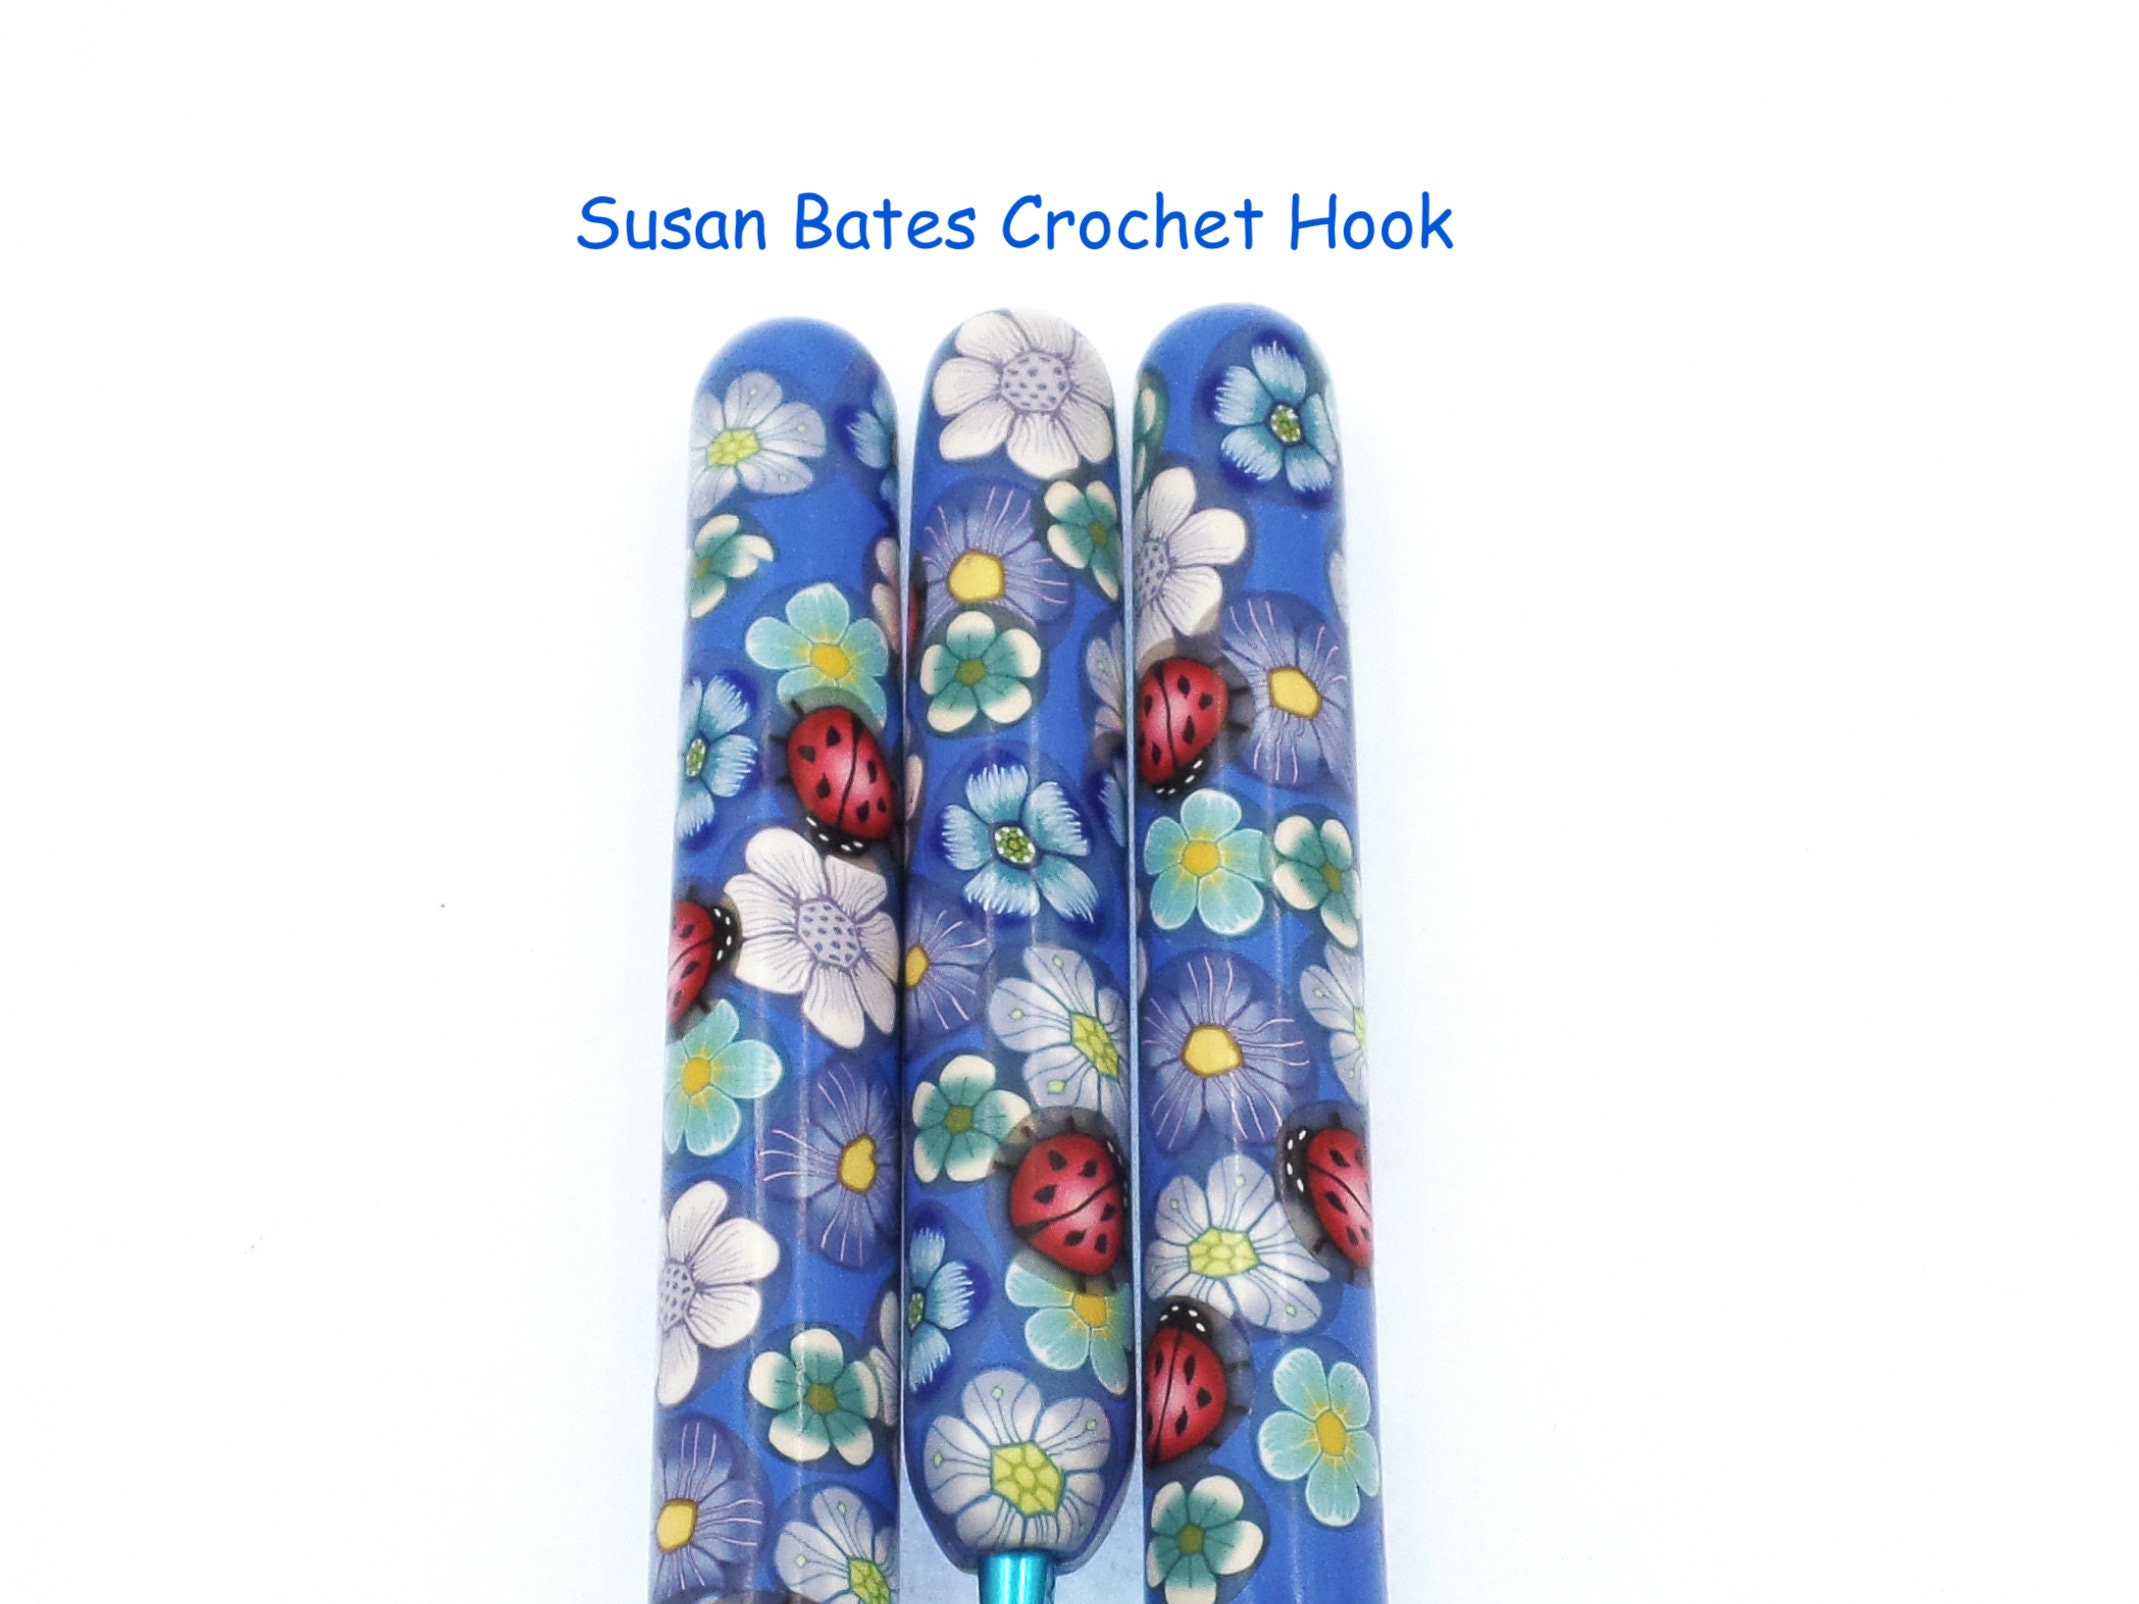 Crochet Hook Susan Bates Ergonomic Aluminum Crochet Hooks